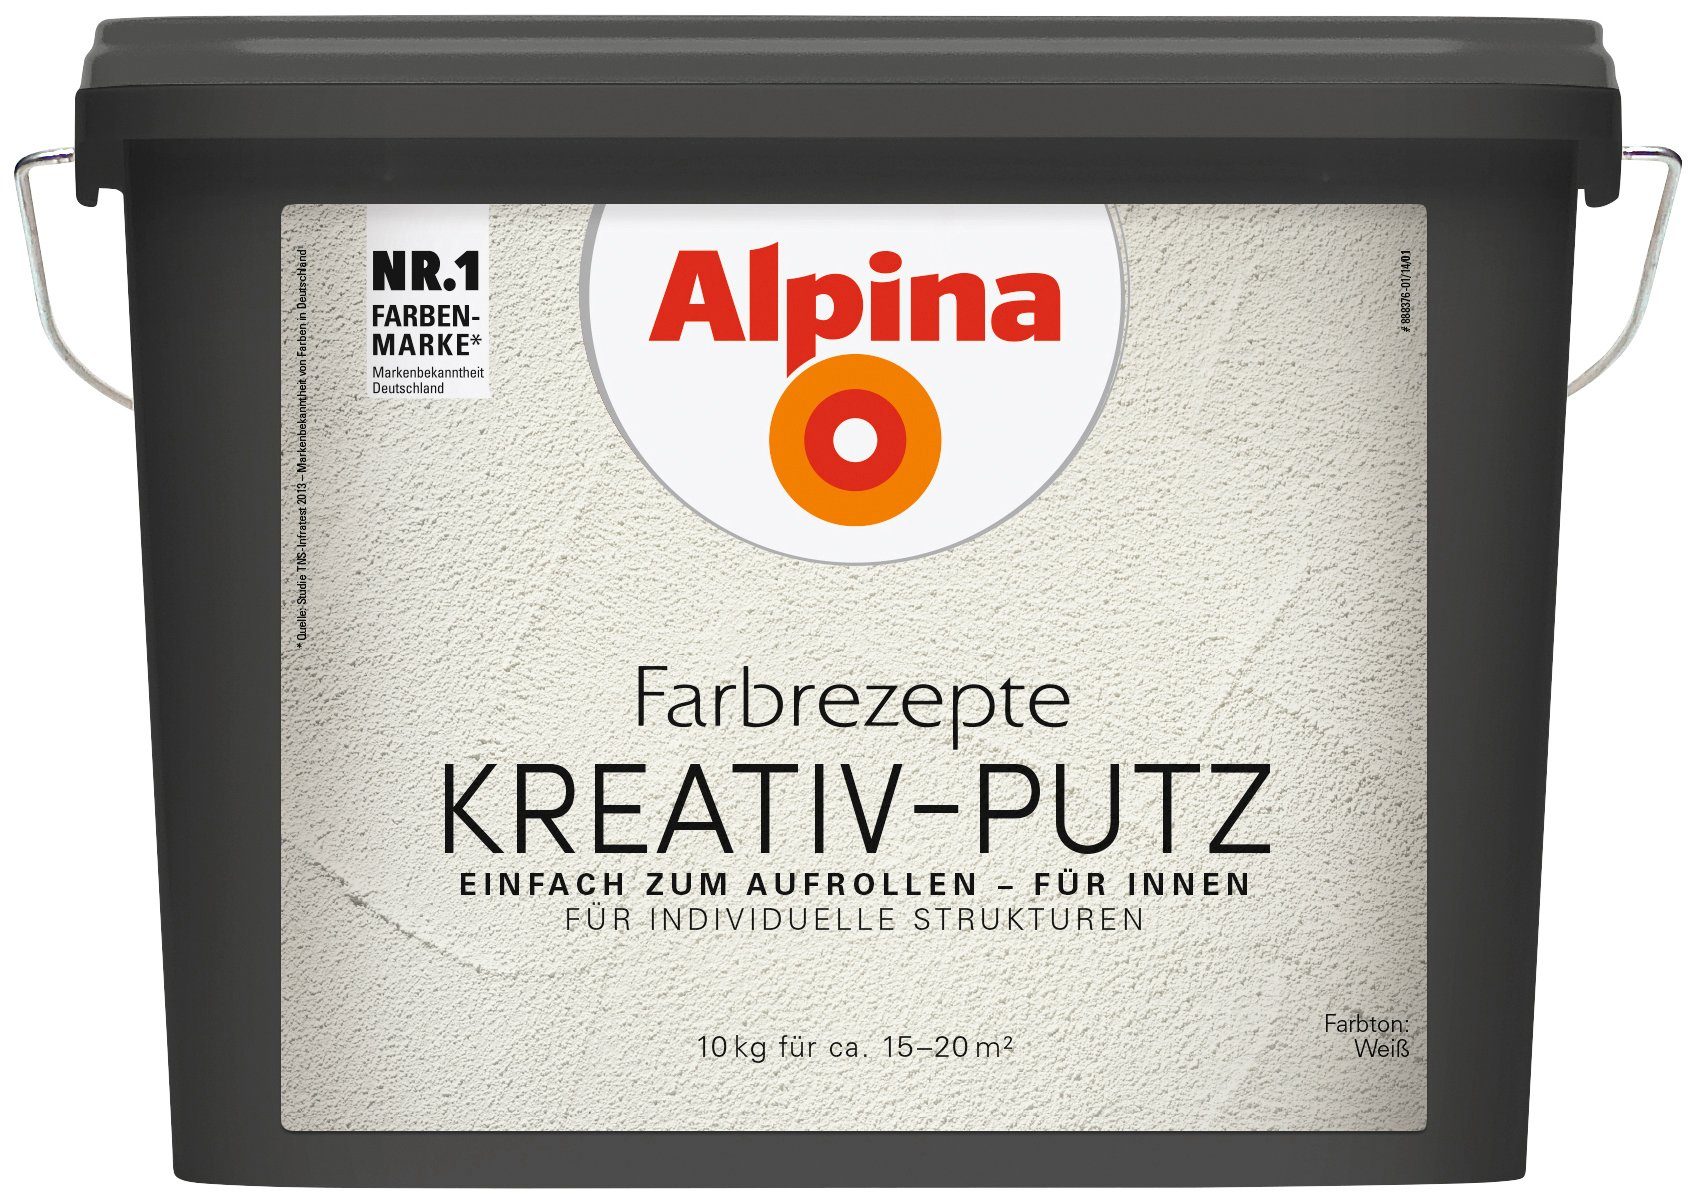 kg - weiß, Kunstharzputz Farbrezepte 10 Alpina Kreativ-Putz